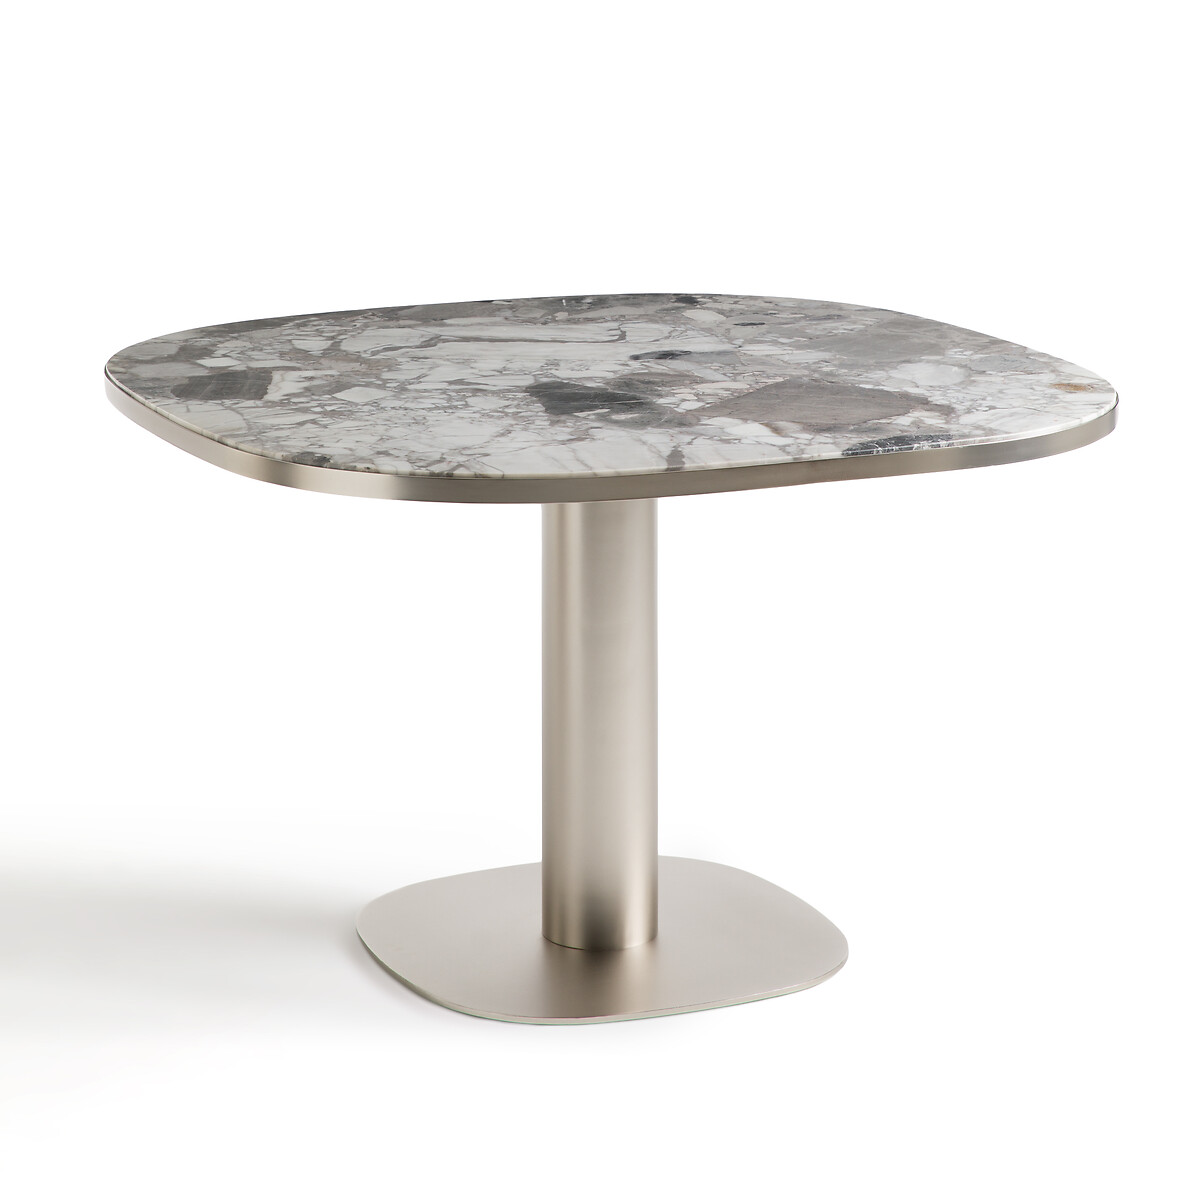 Стол обеденный из серого мрамора Lixfeld на 6 персон серый стол из мрамора buondi дизайн э галлины на 8 персон белый